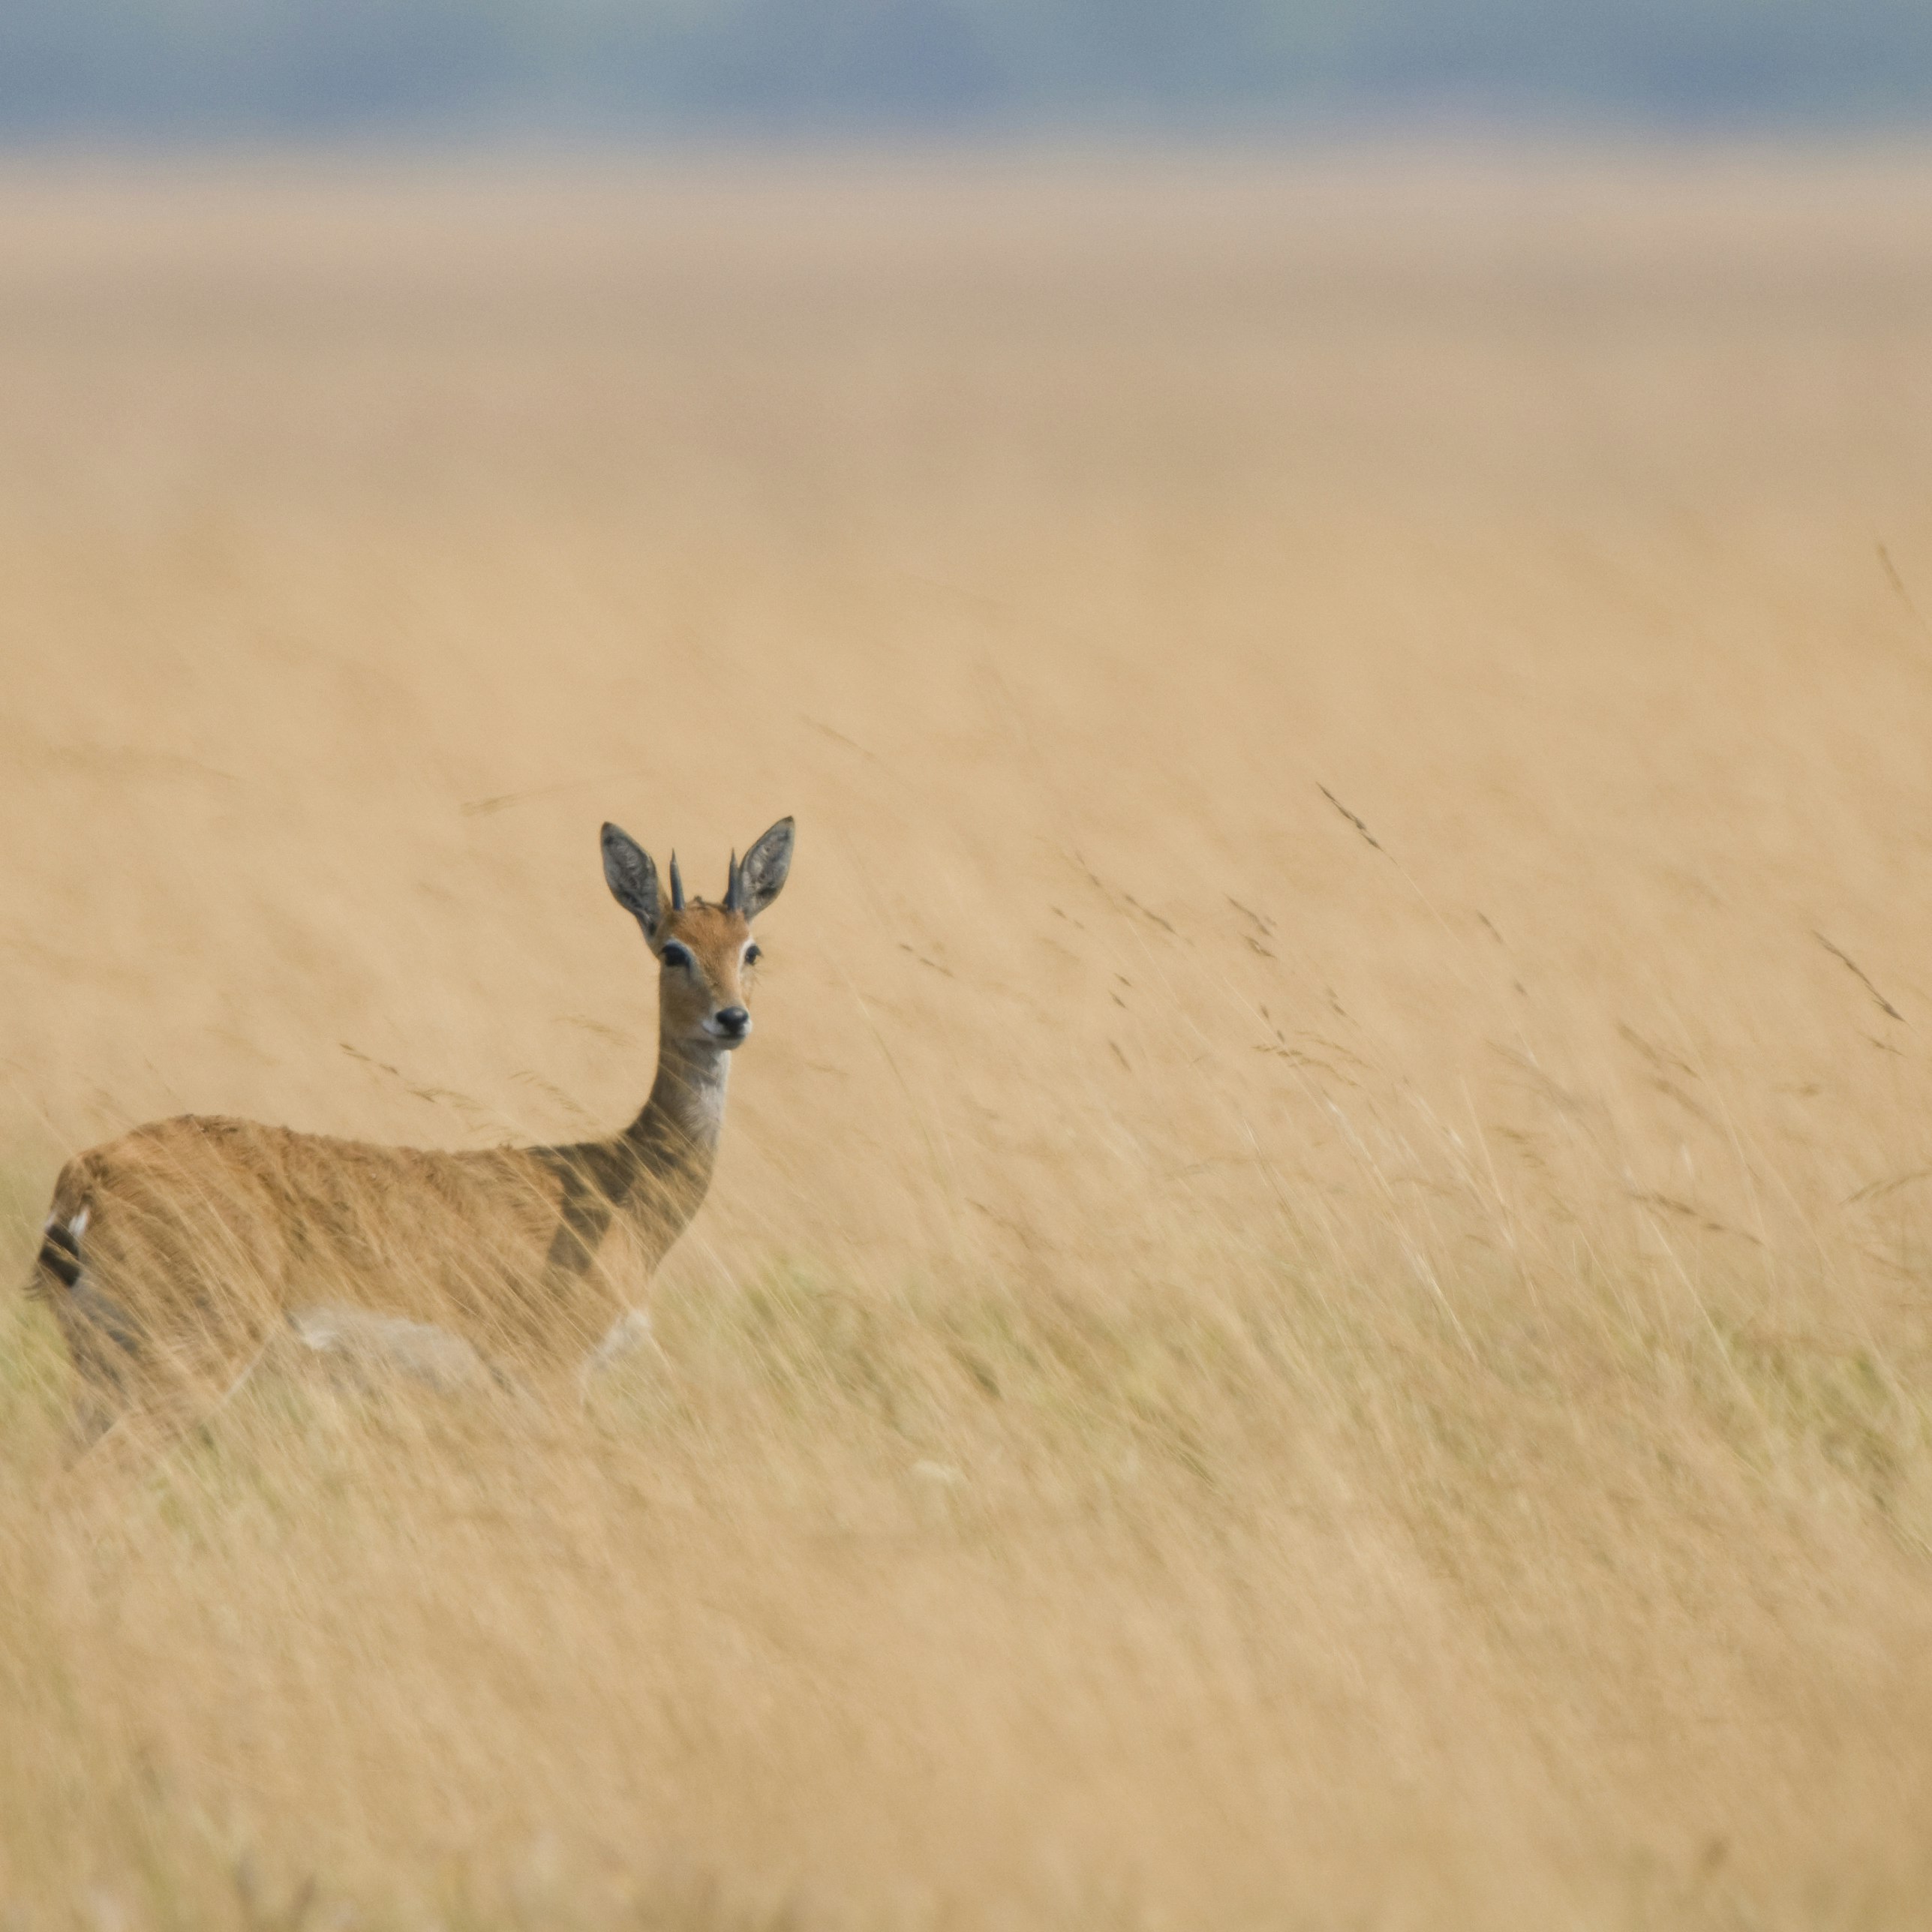 Oribi (Ourebia ourebi) in grassland, Liuwa Plain National Park, Zambia